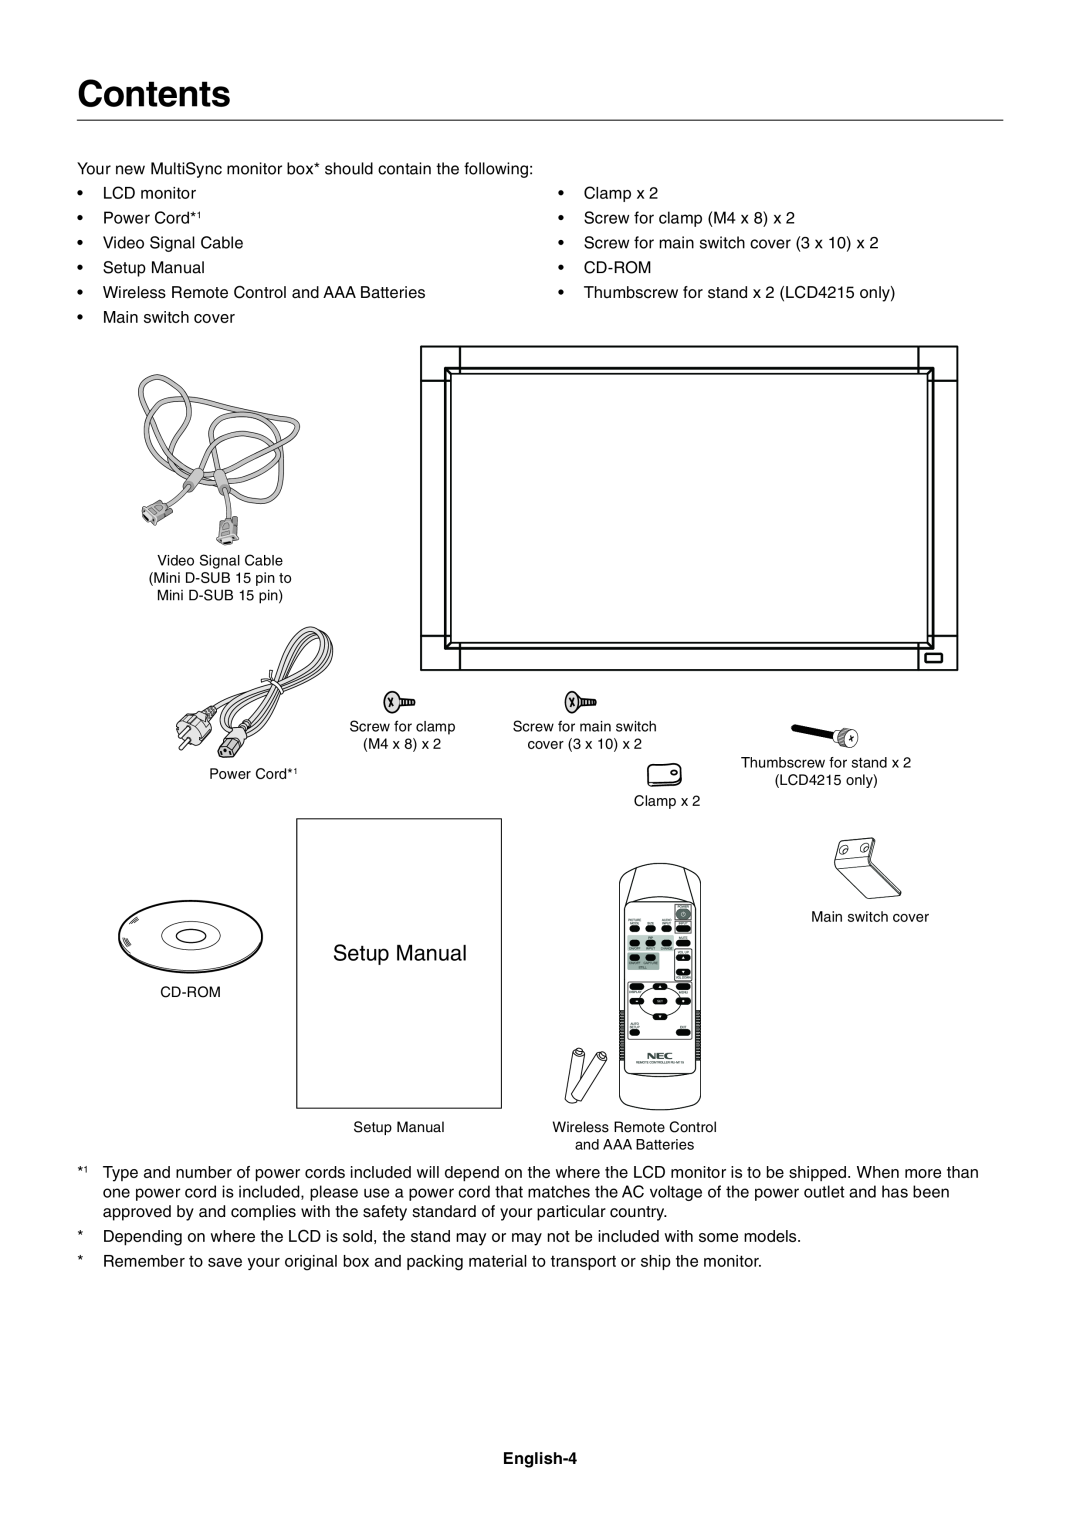 NEC LCD3215, LCD4215 user manual Contents, Setup Manual 